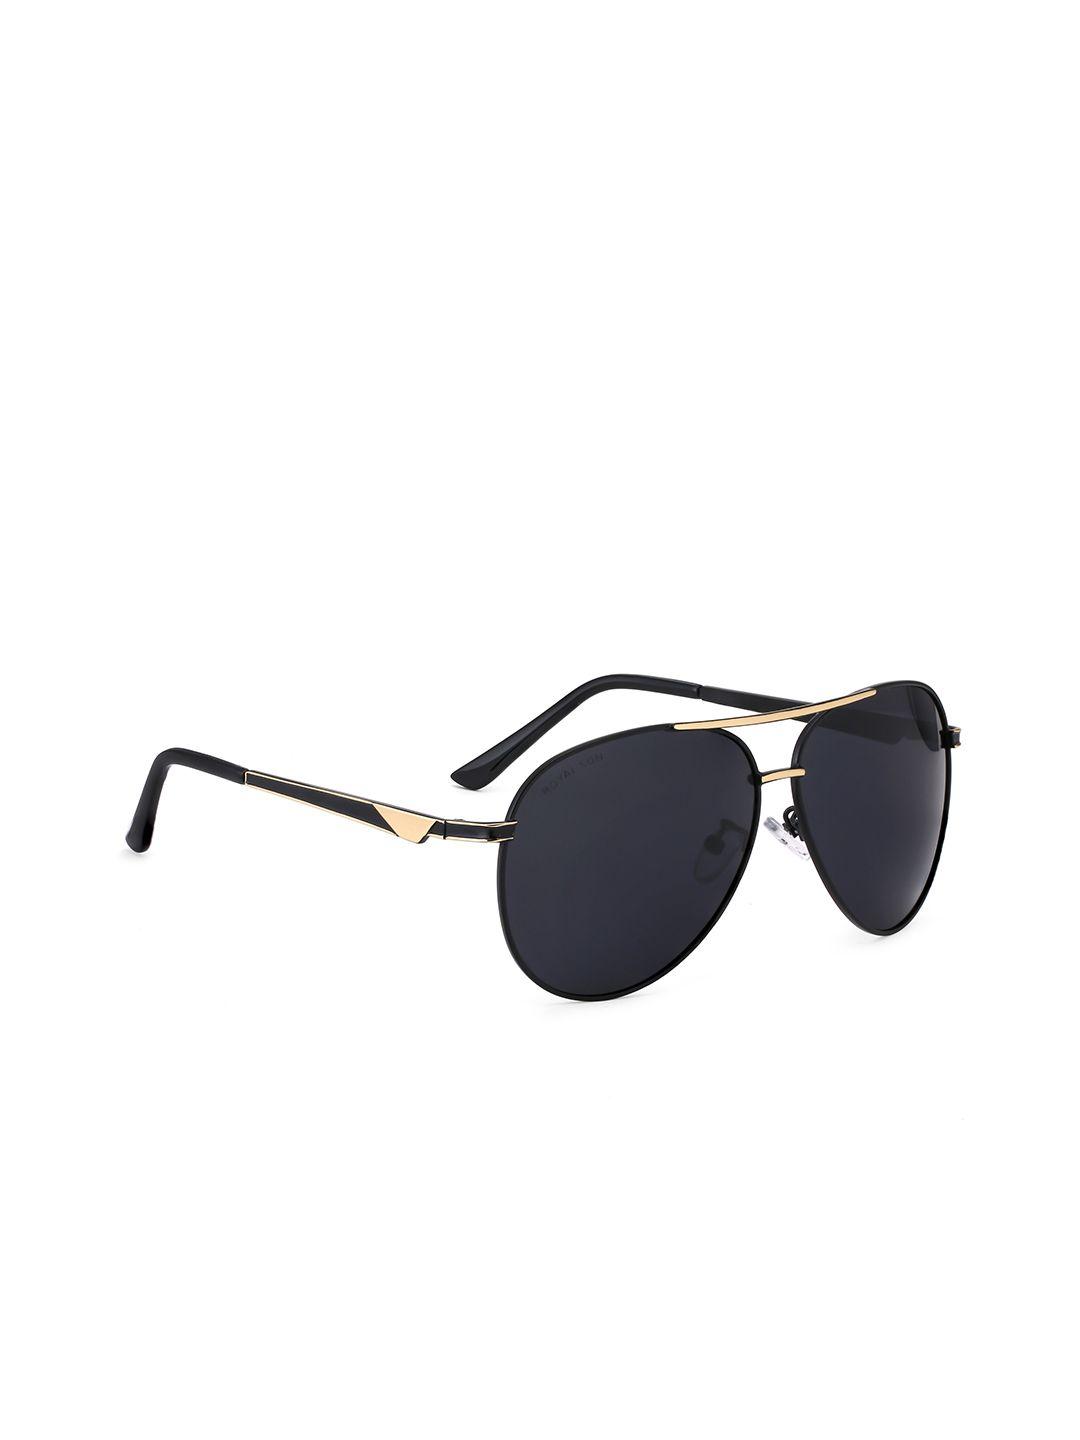 royal son unisex black lens & gold-toned aviator sunglasses with polarised lens